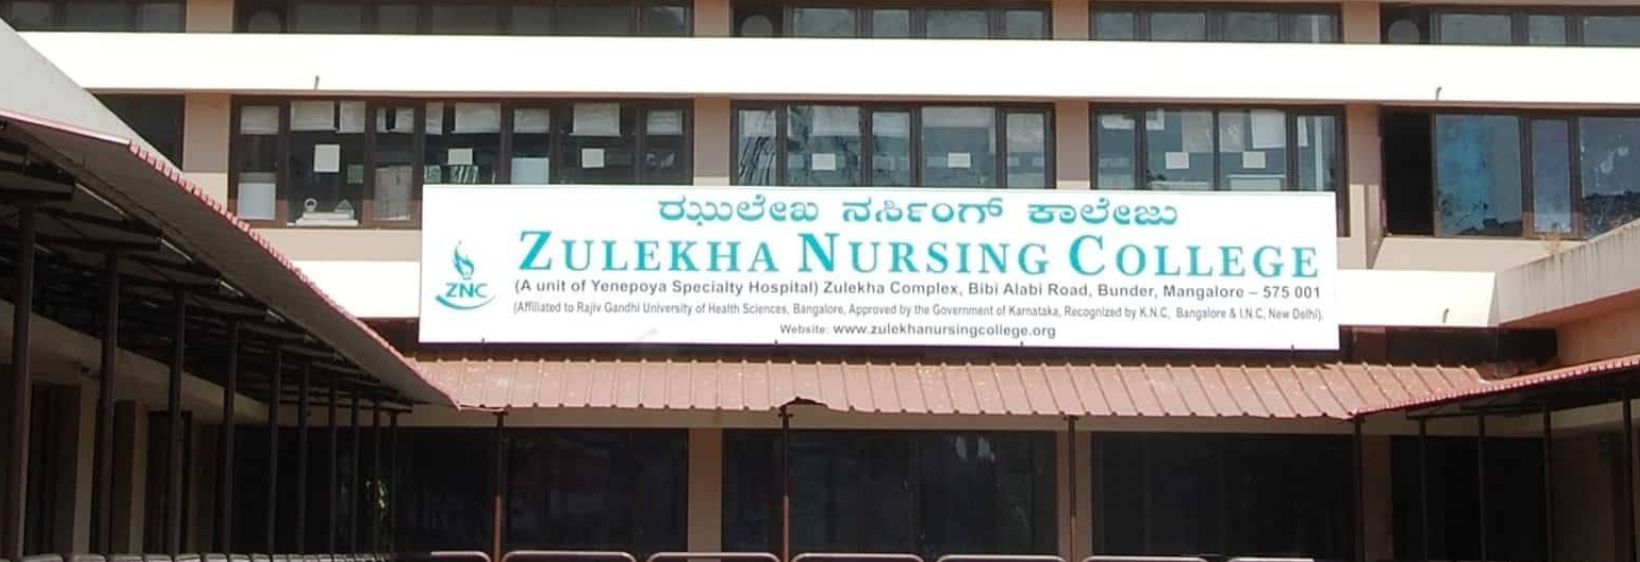 Zulekha Nursing College - Mangalore